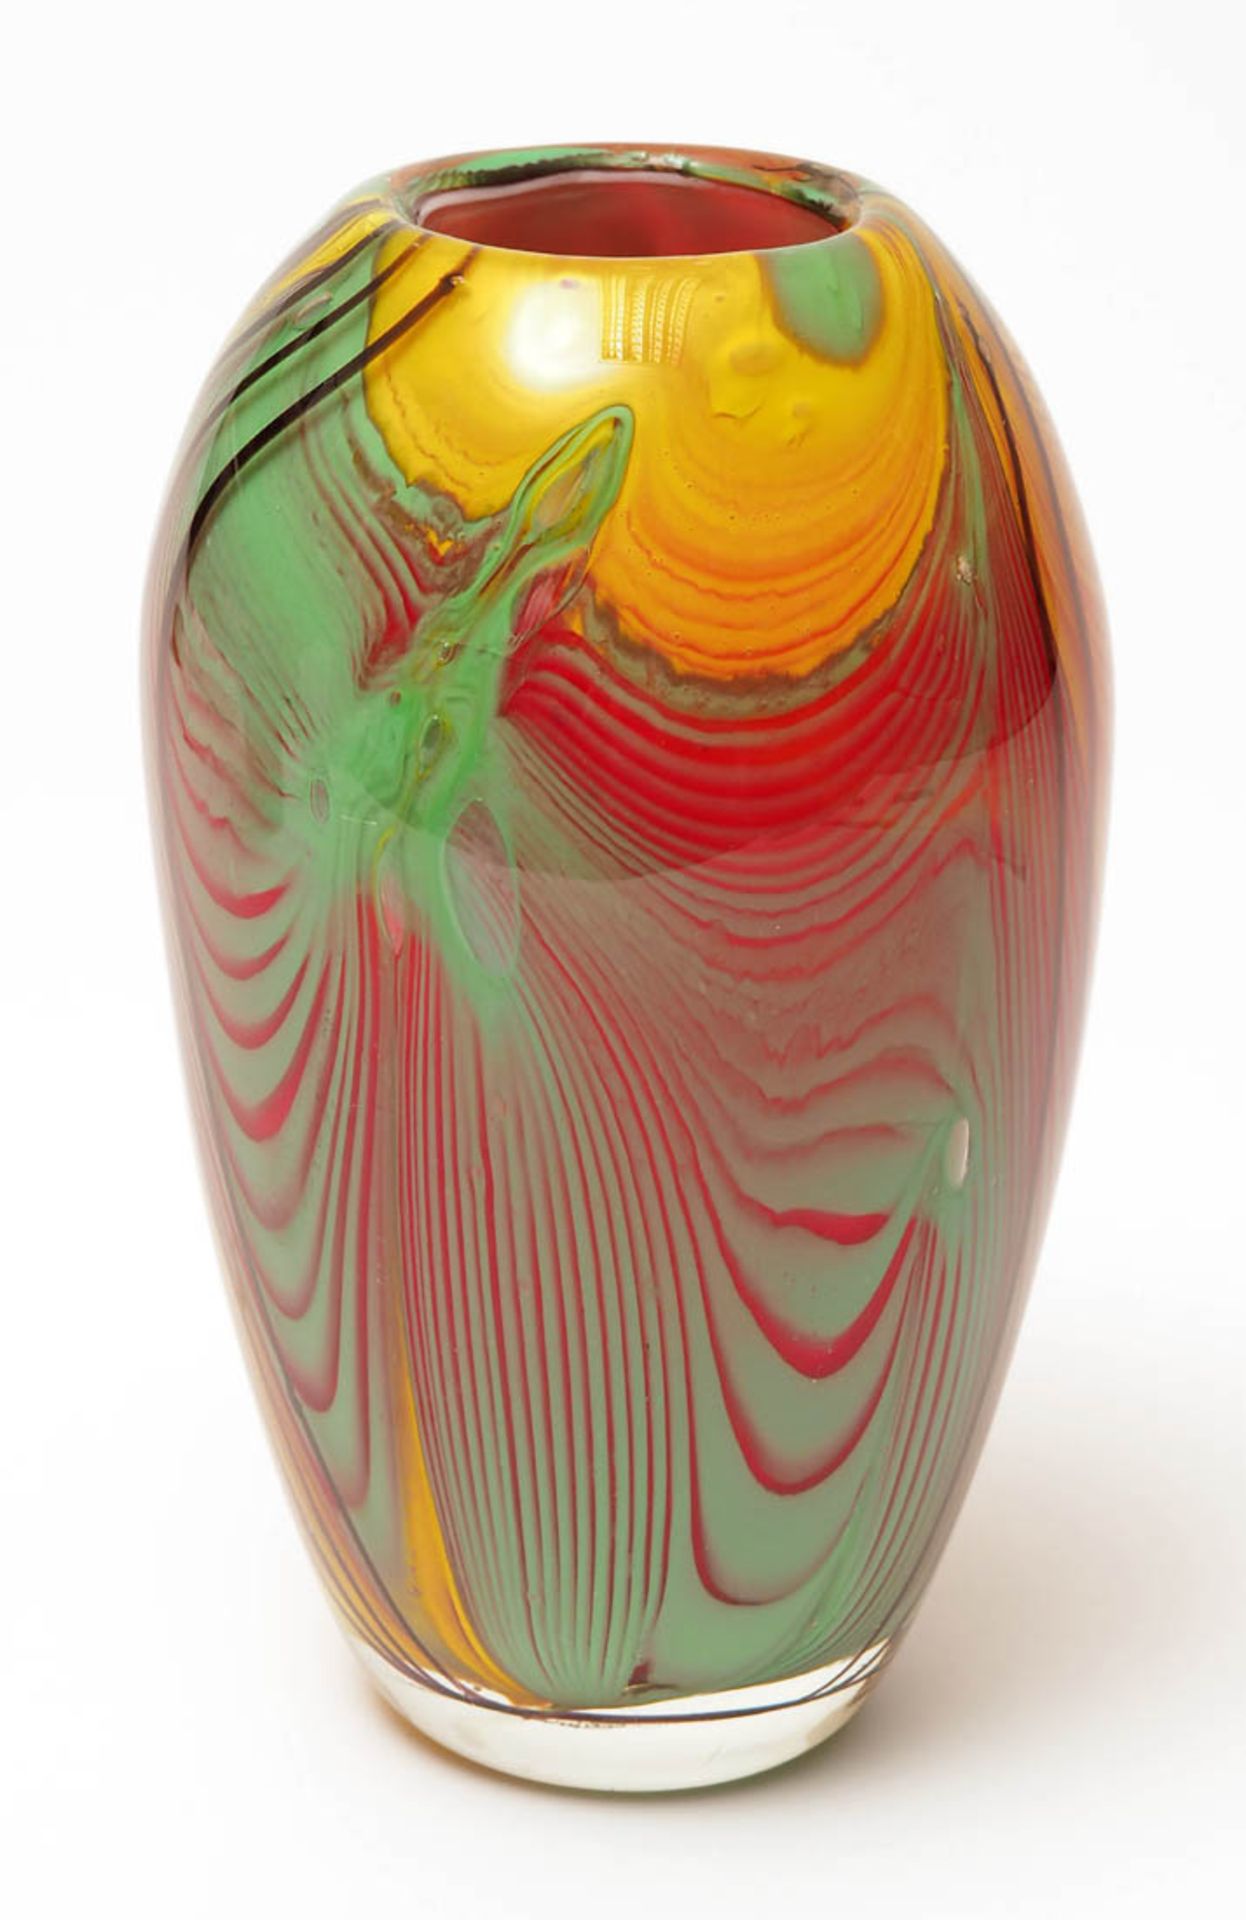 Vase, Murano Eiförmiger Korpus. Farbloses Glas mit weißem Innenüberfang und gekämmten